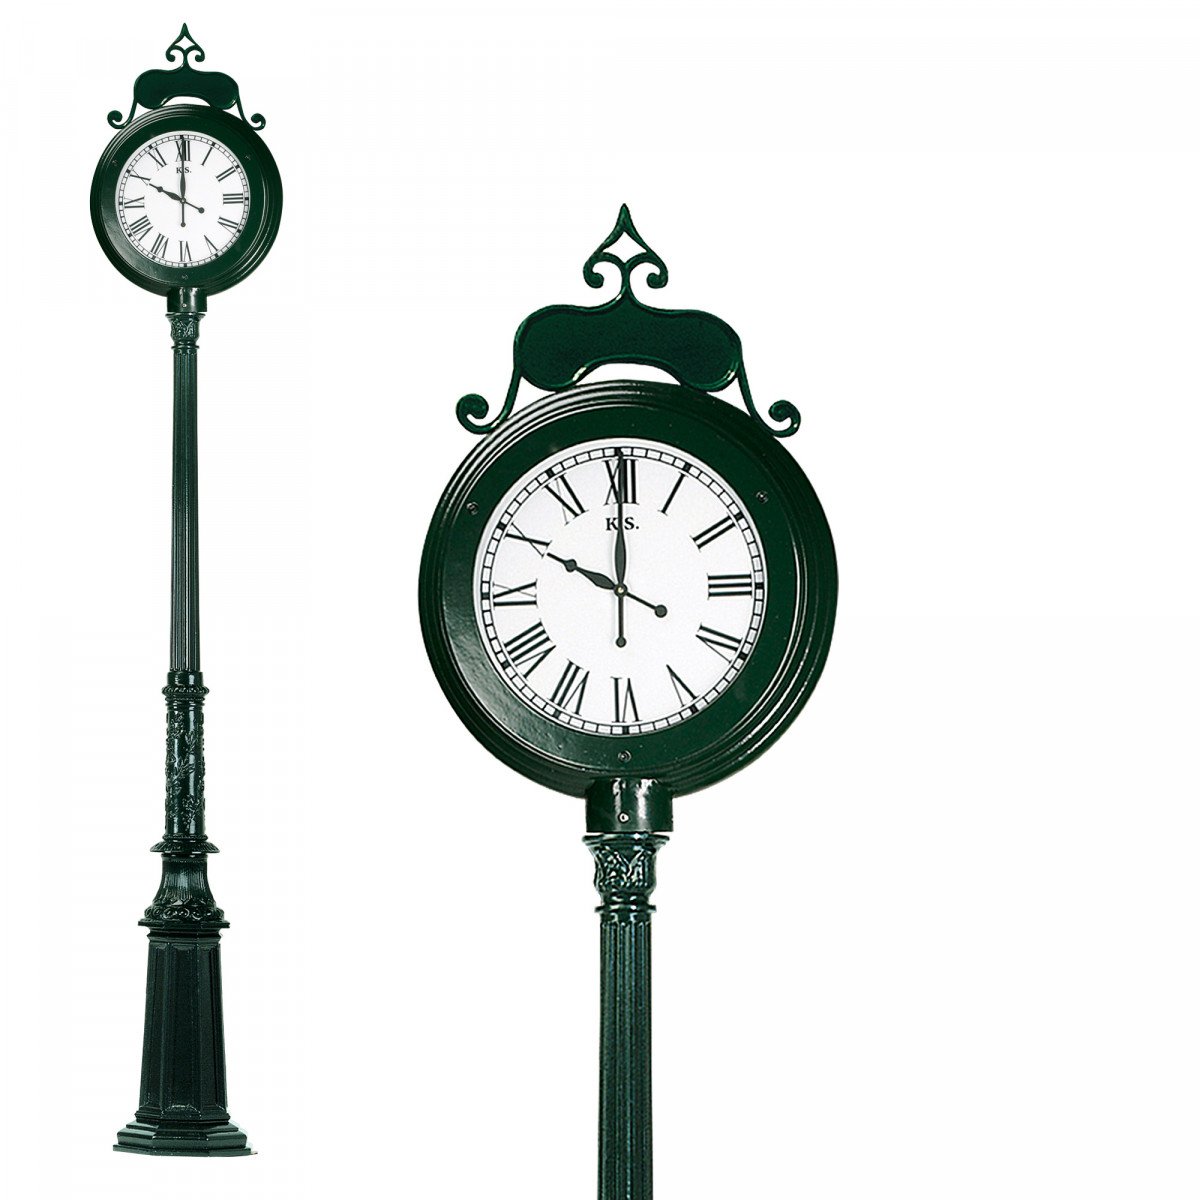 Railway clock XL